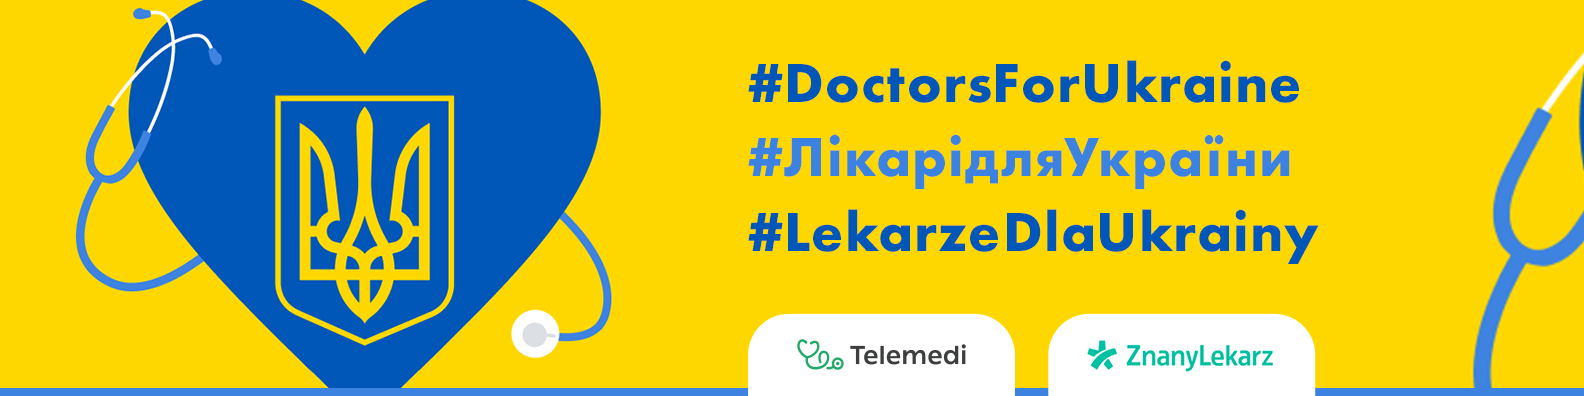 Lekarze dla Ukrainy! - lekarz online - Telemedi.com